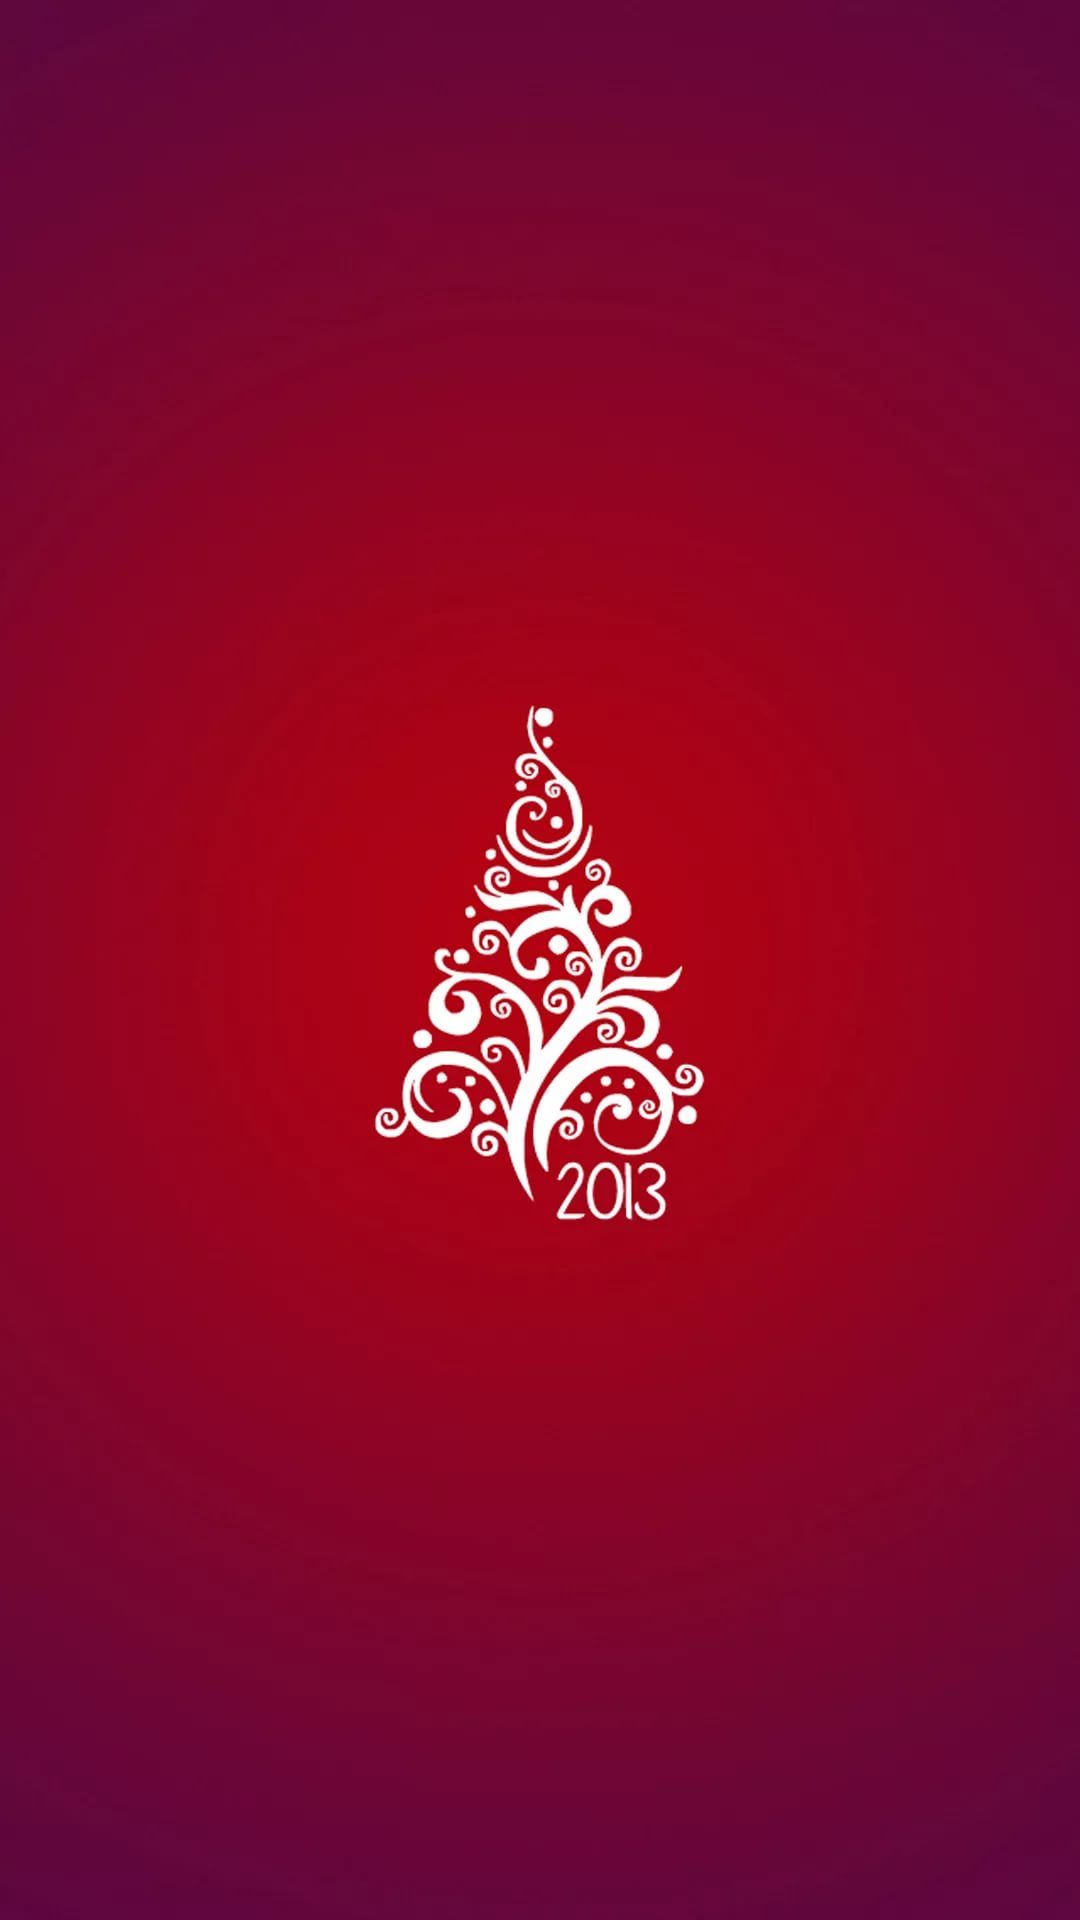 Free Christmas iPhone 6 wallpaper